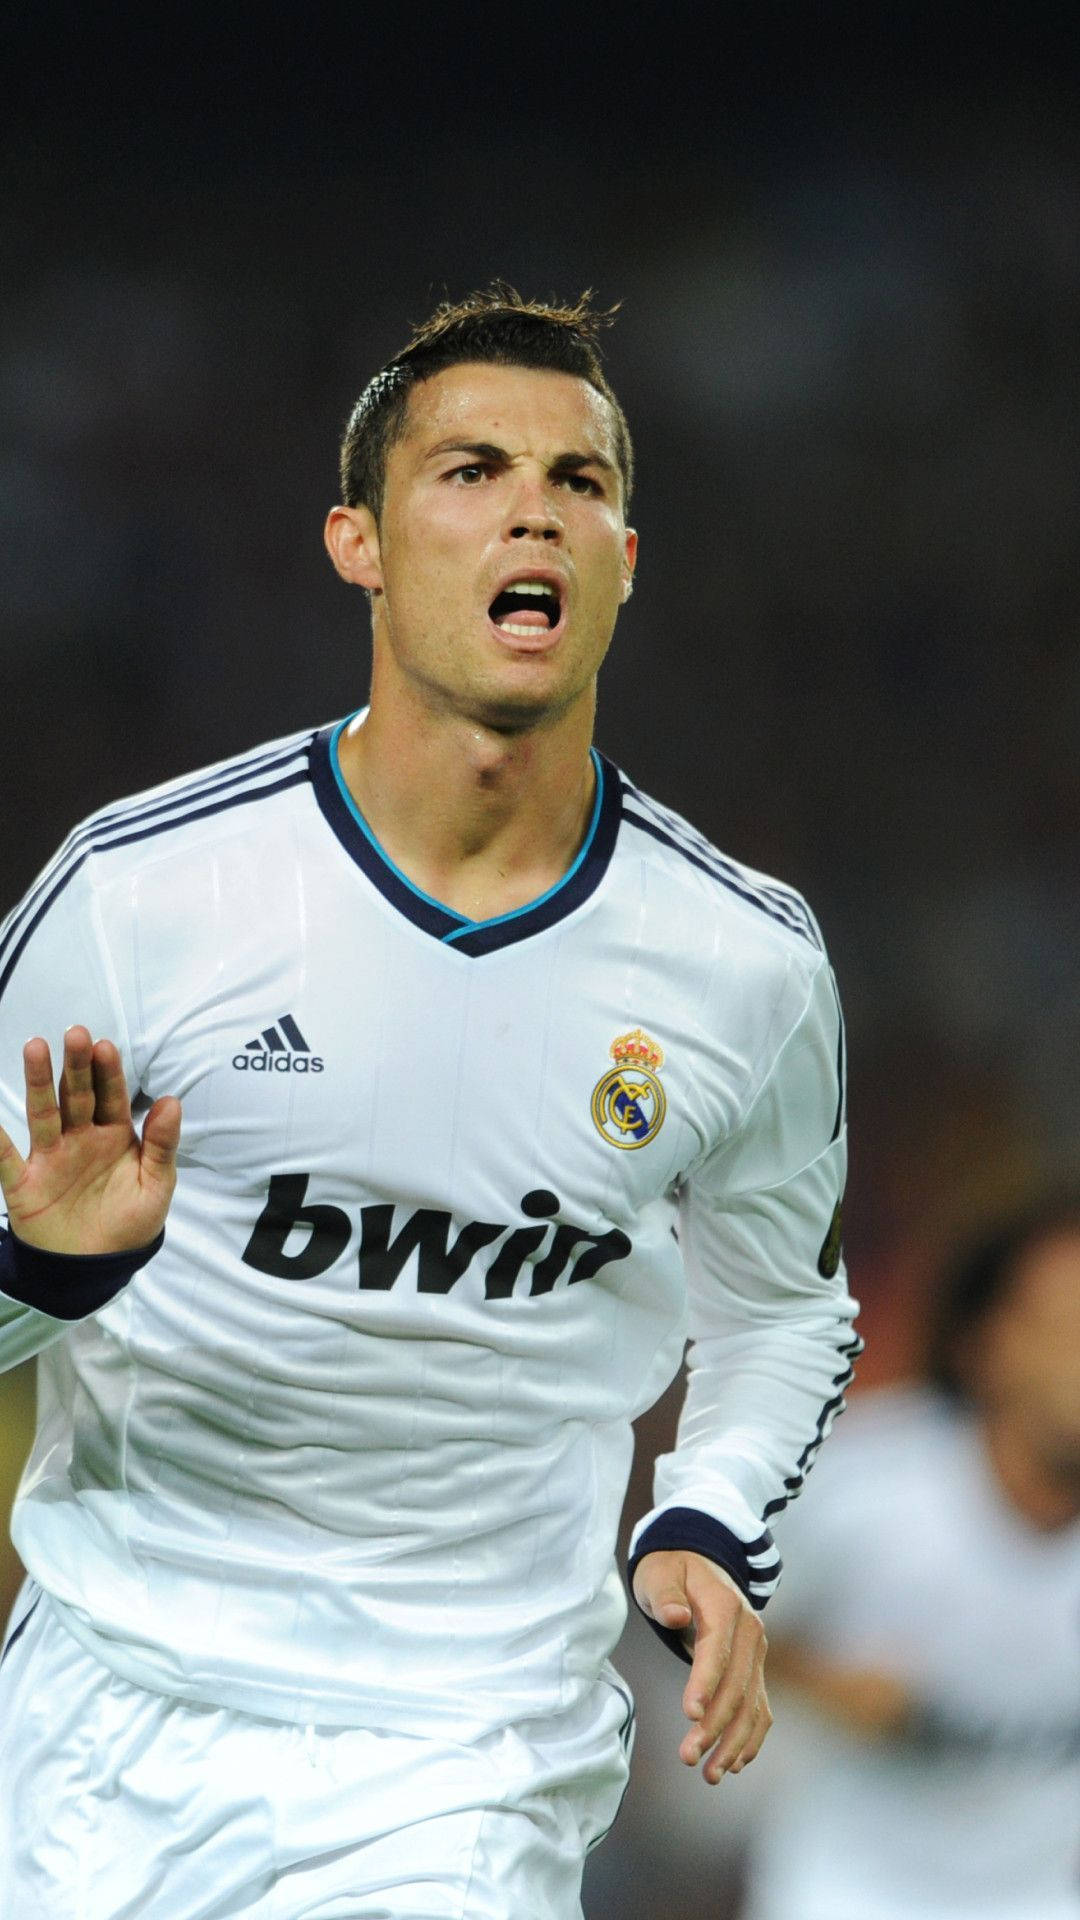 Bwin Logo Cristiano Ronaldo iPhone Wallpaper